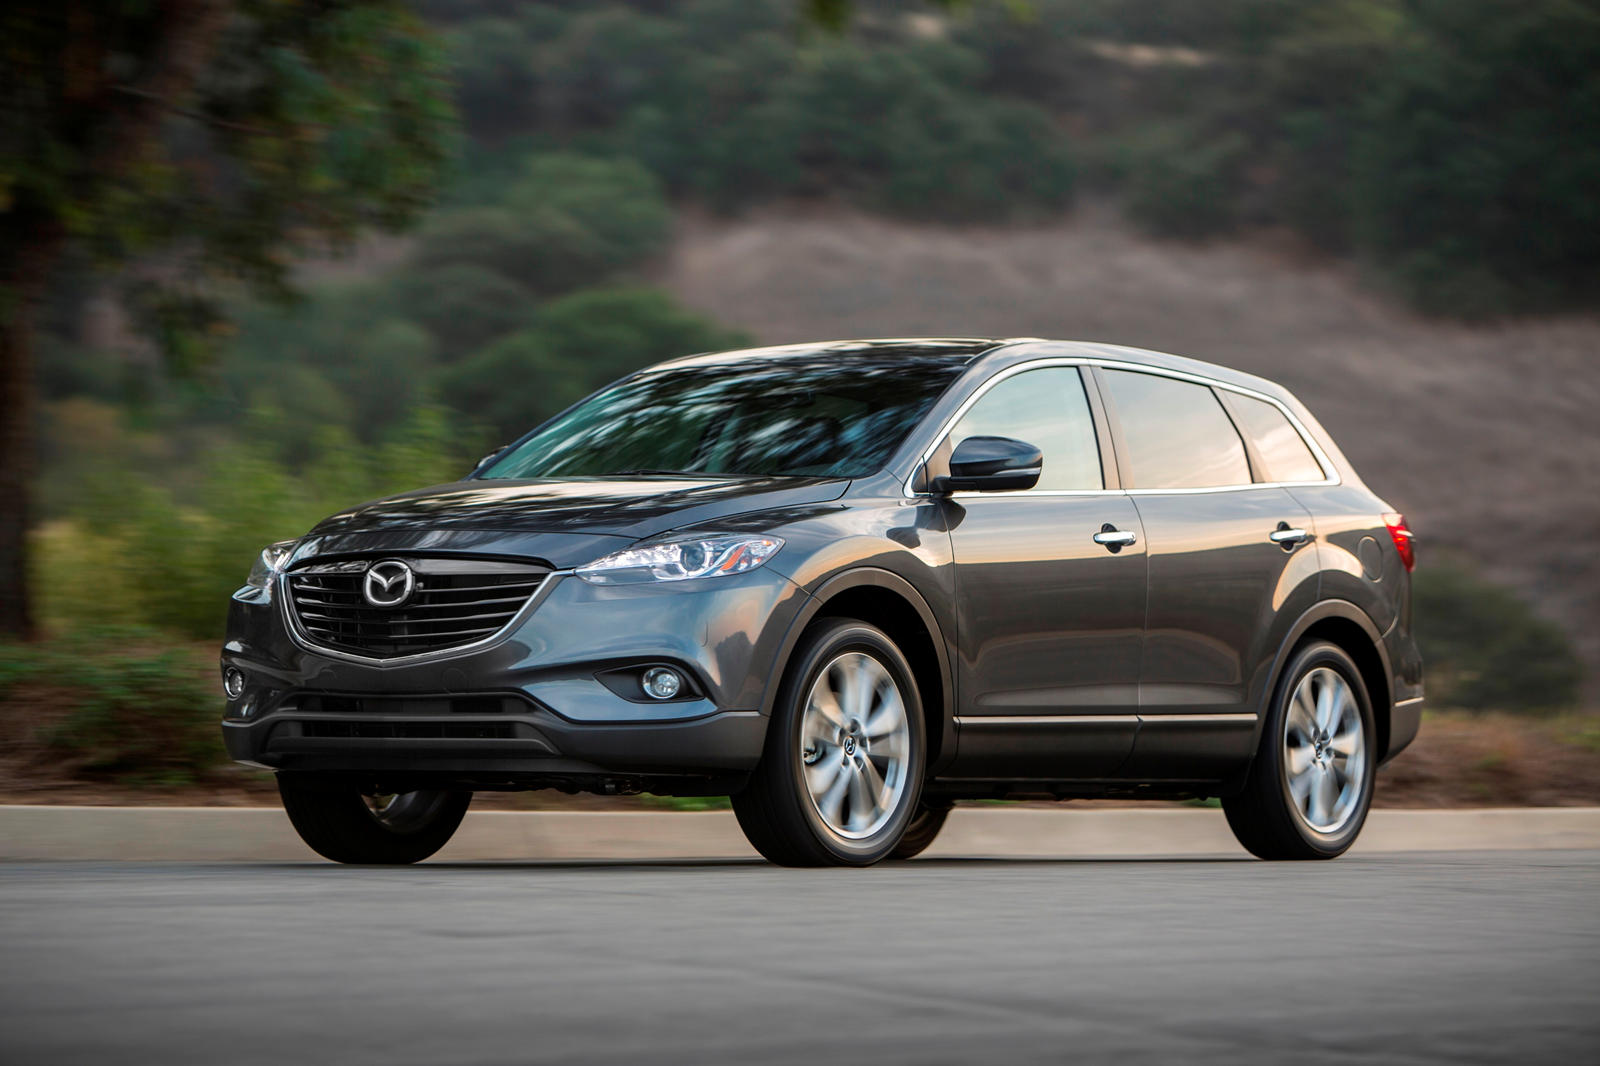 2015 Mazda Cx 9 Review Trims Specs Price New Interior Features